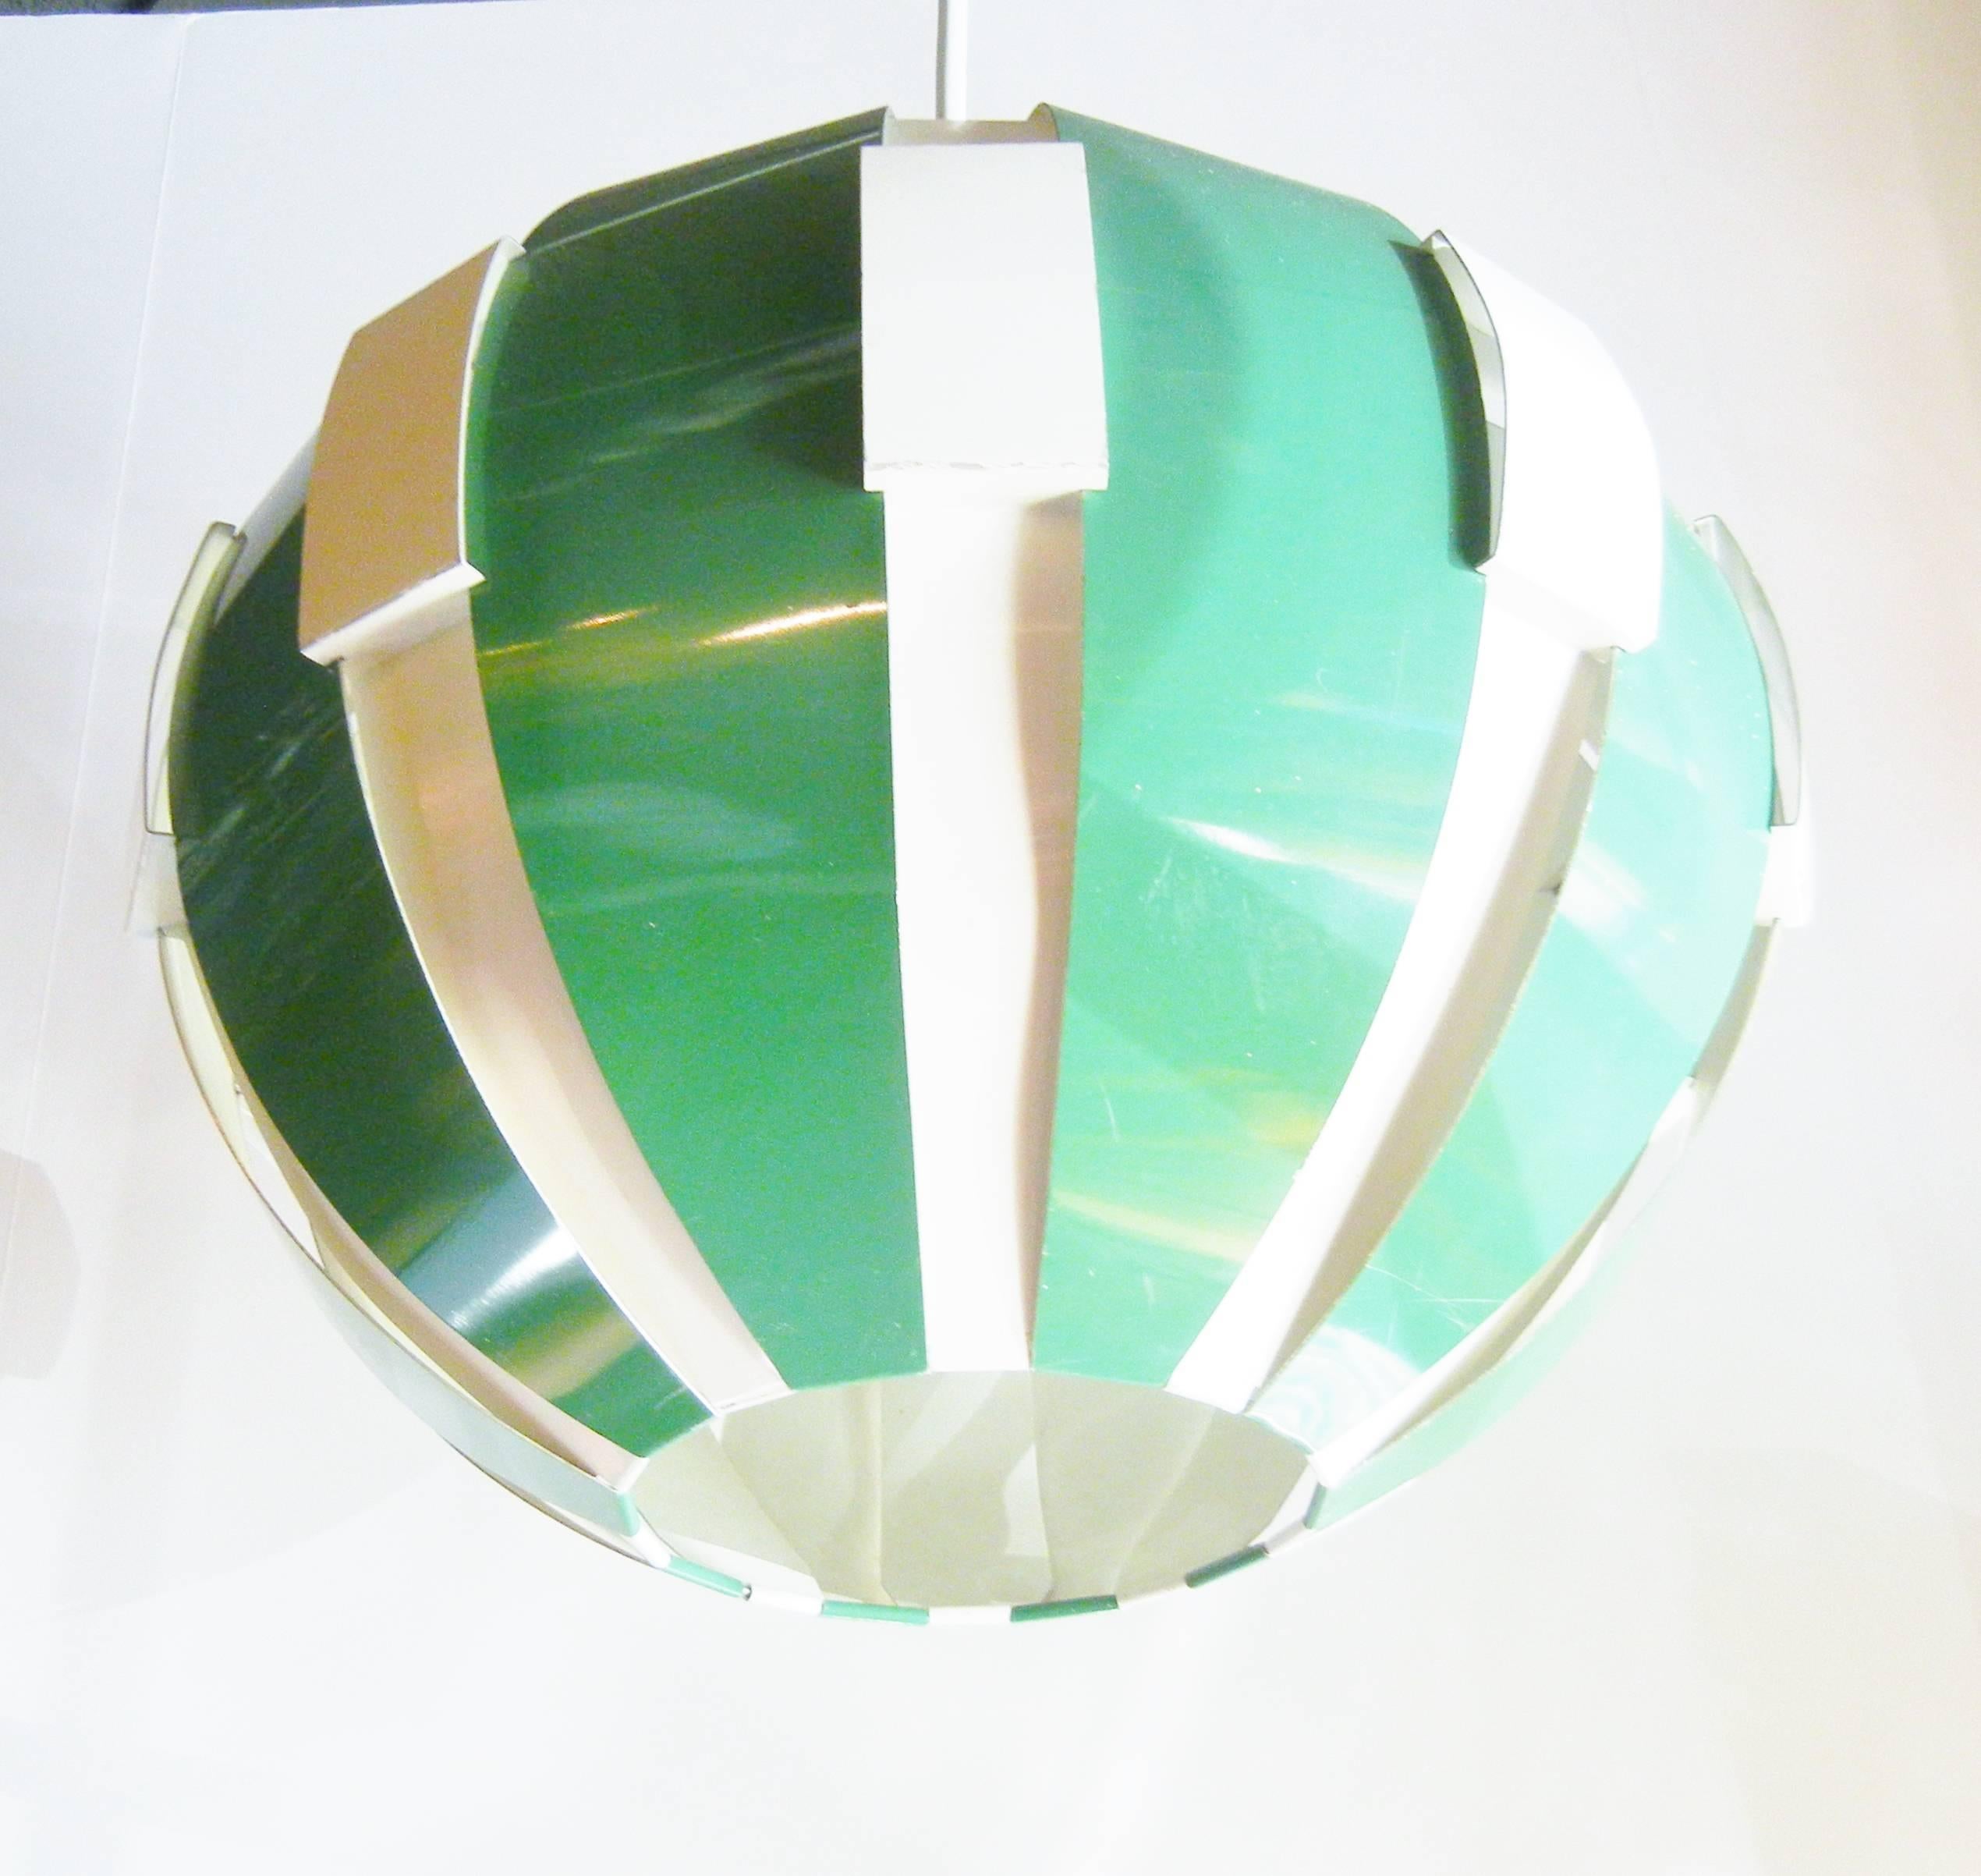 Telstar, 1st US Satellite, Pendant Lamp in Green and Ivory Aluminum, 1962 3